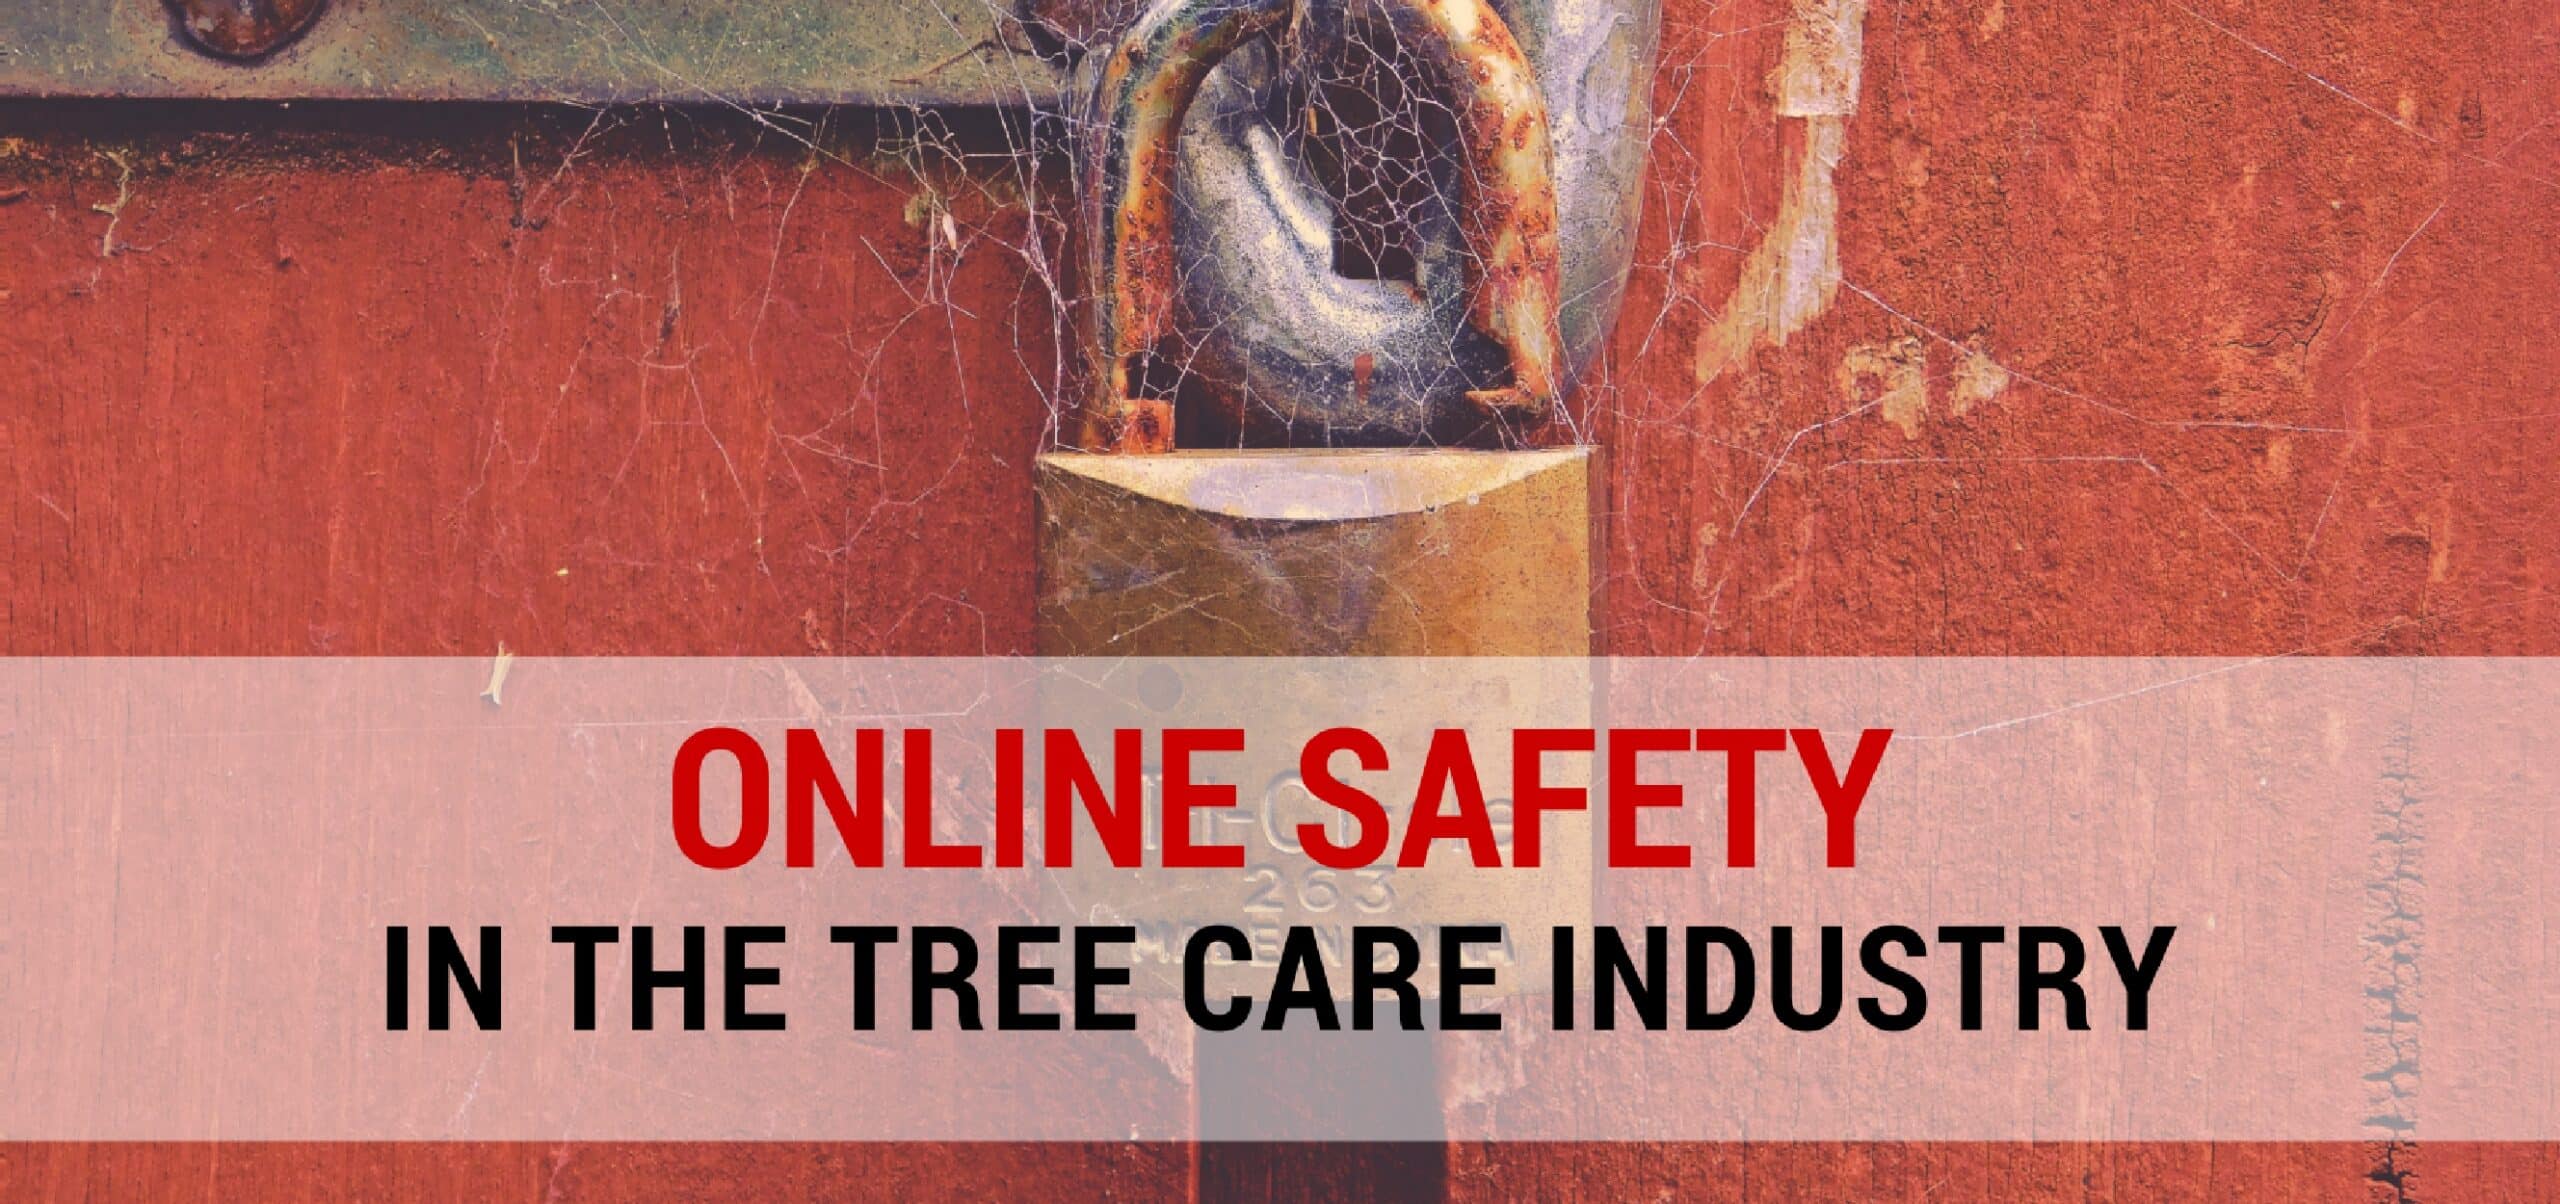 online safety in tree care - locked door